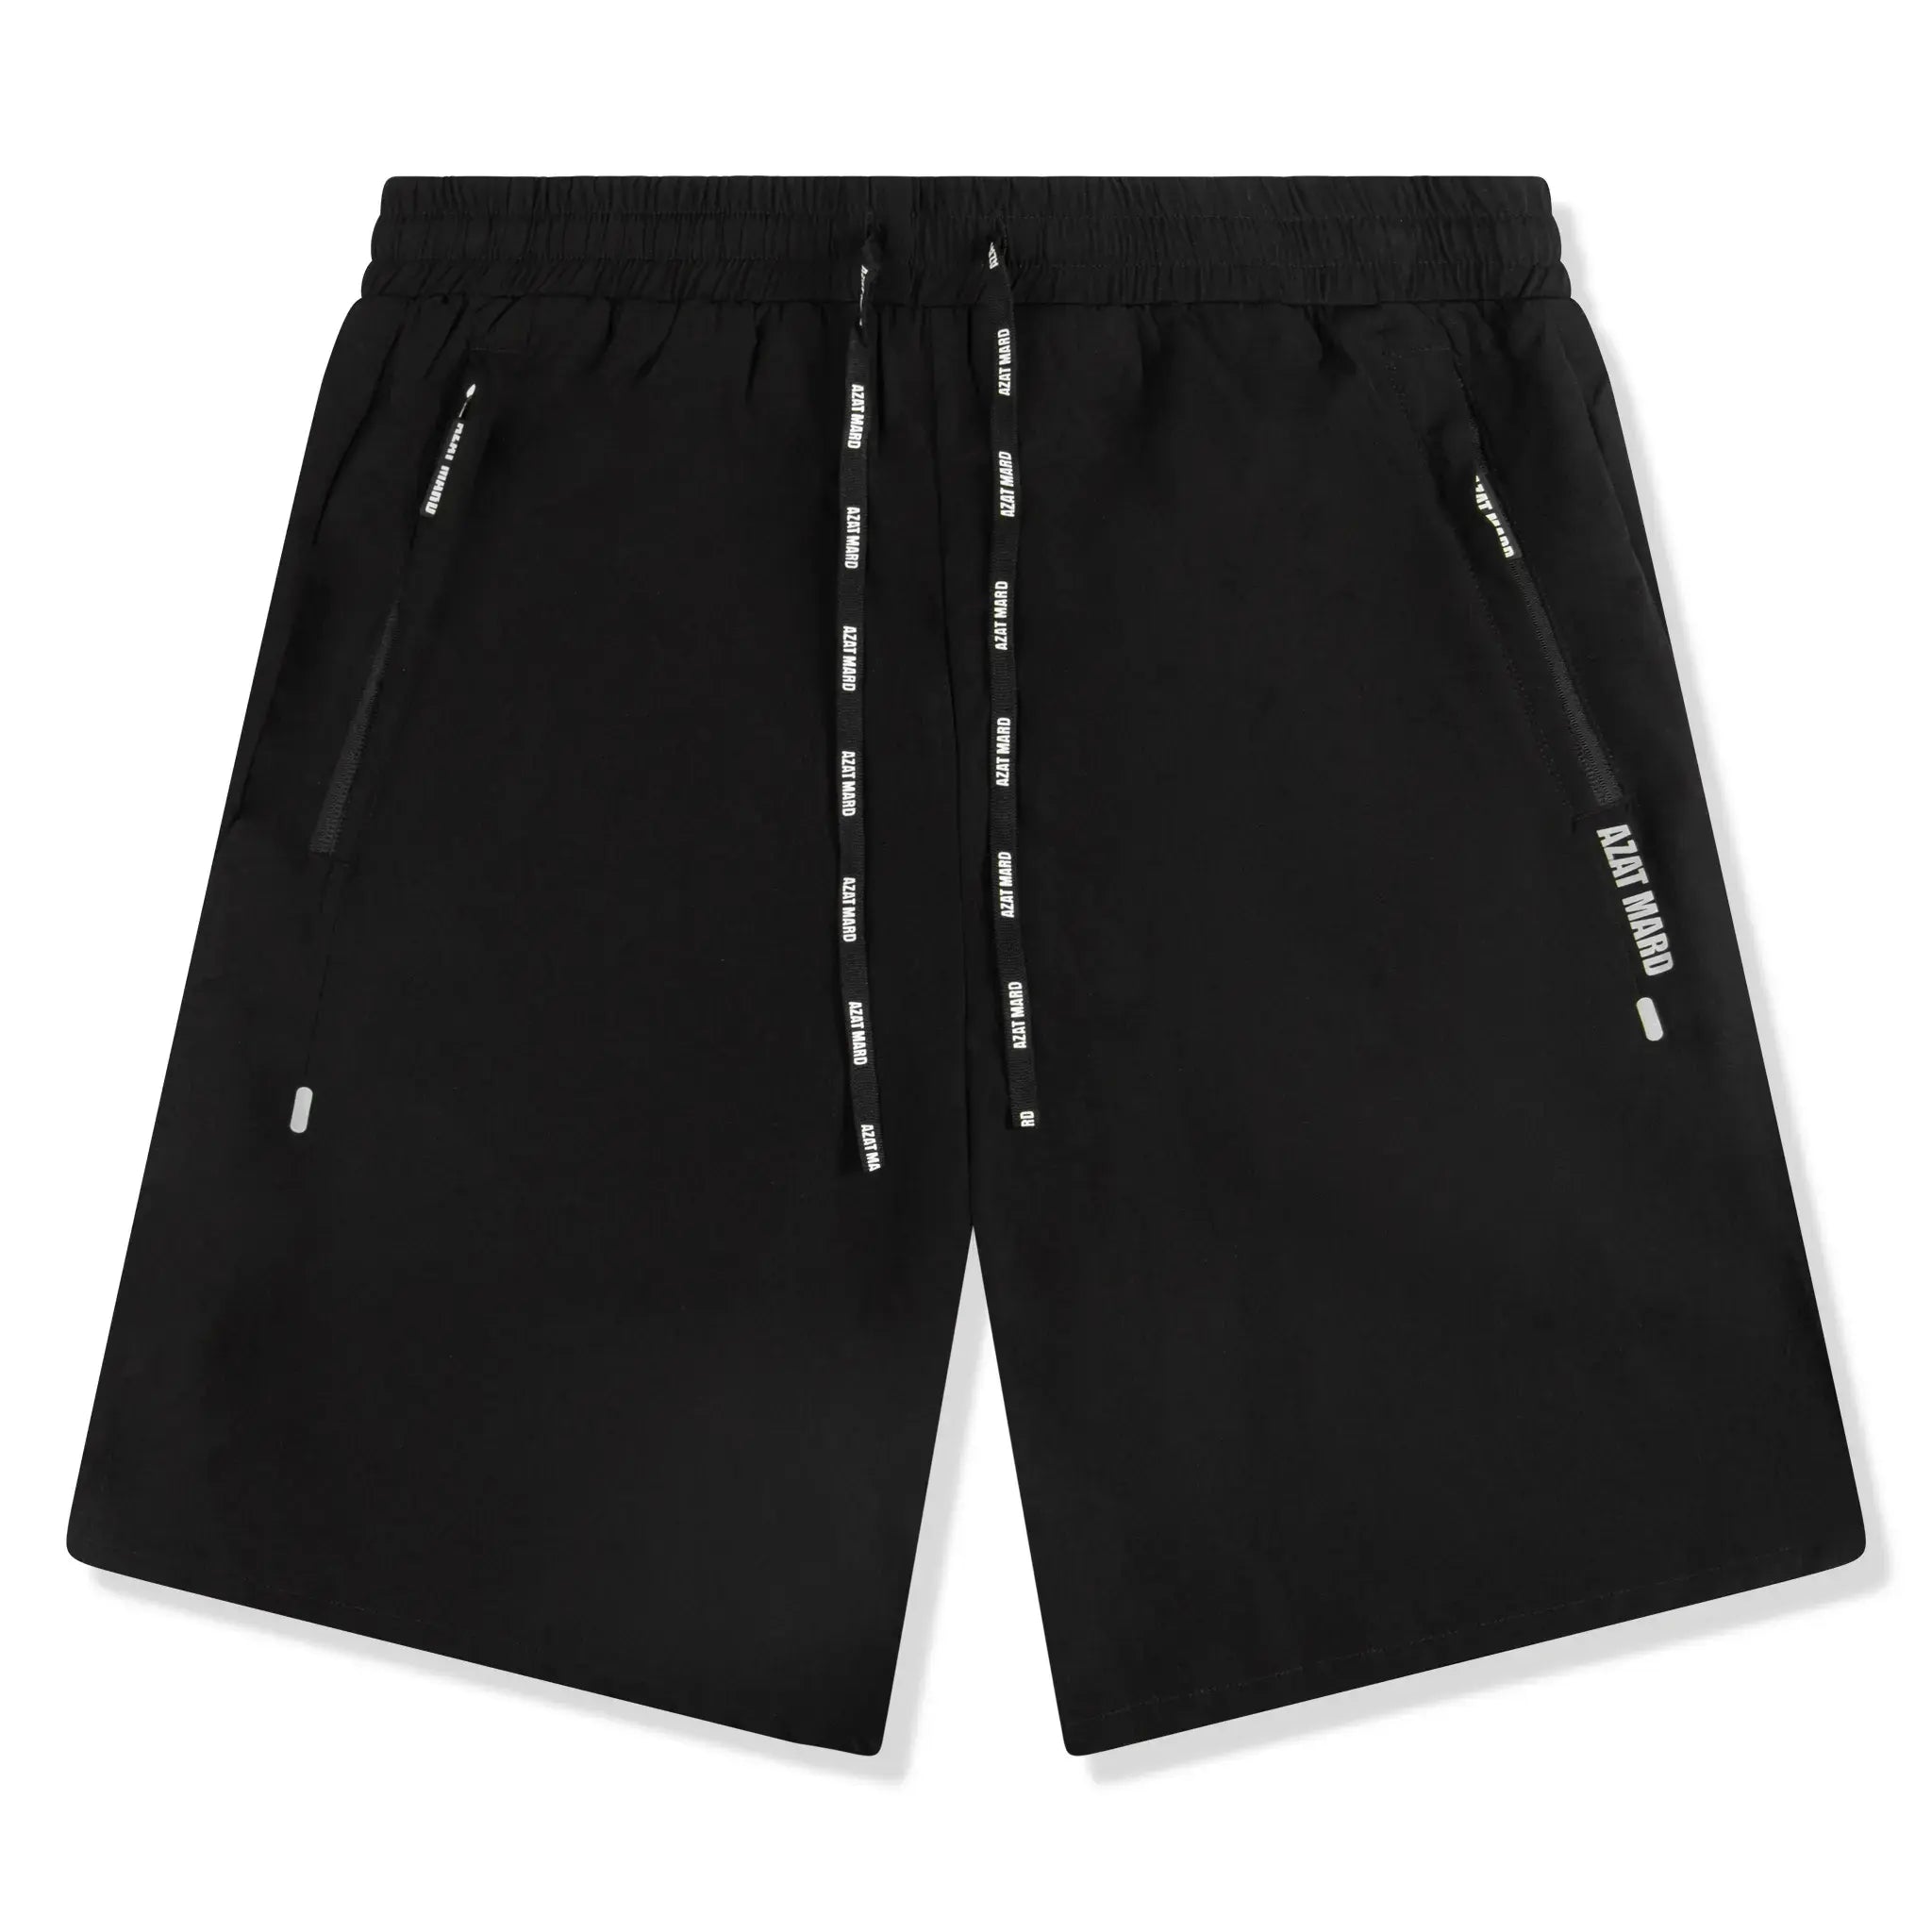 Front view of Azat Mard Activewear Shorts hangout Black FW22101